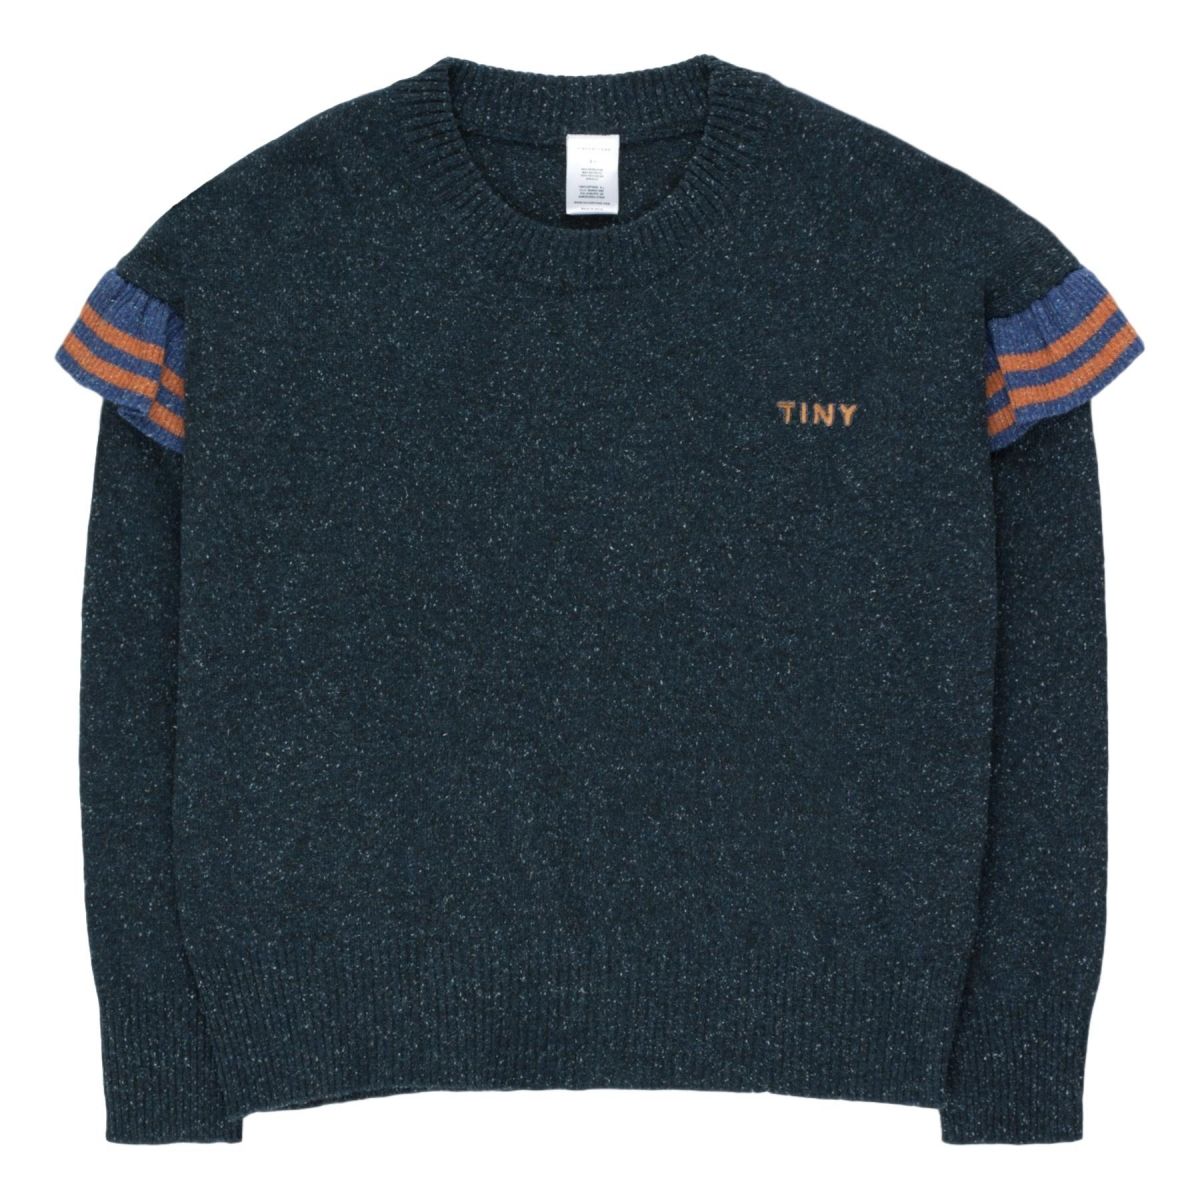 Tiny Cottons Tiny Frills Sweater navy AW20-235-007 